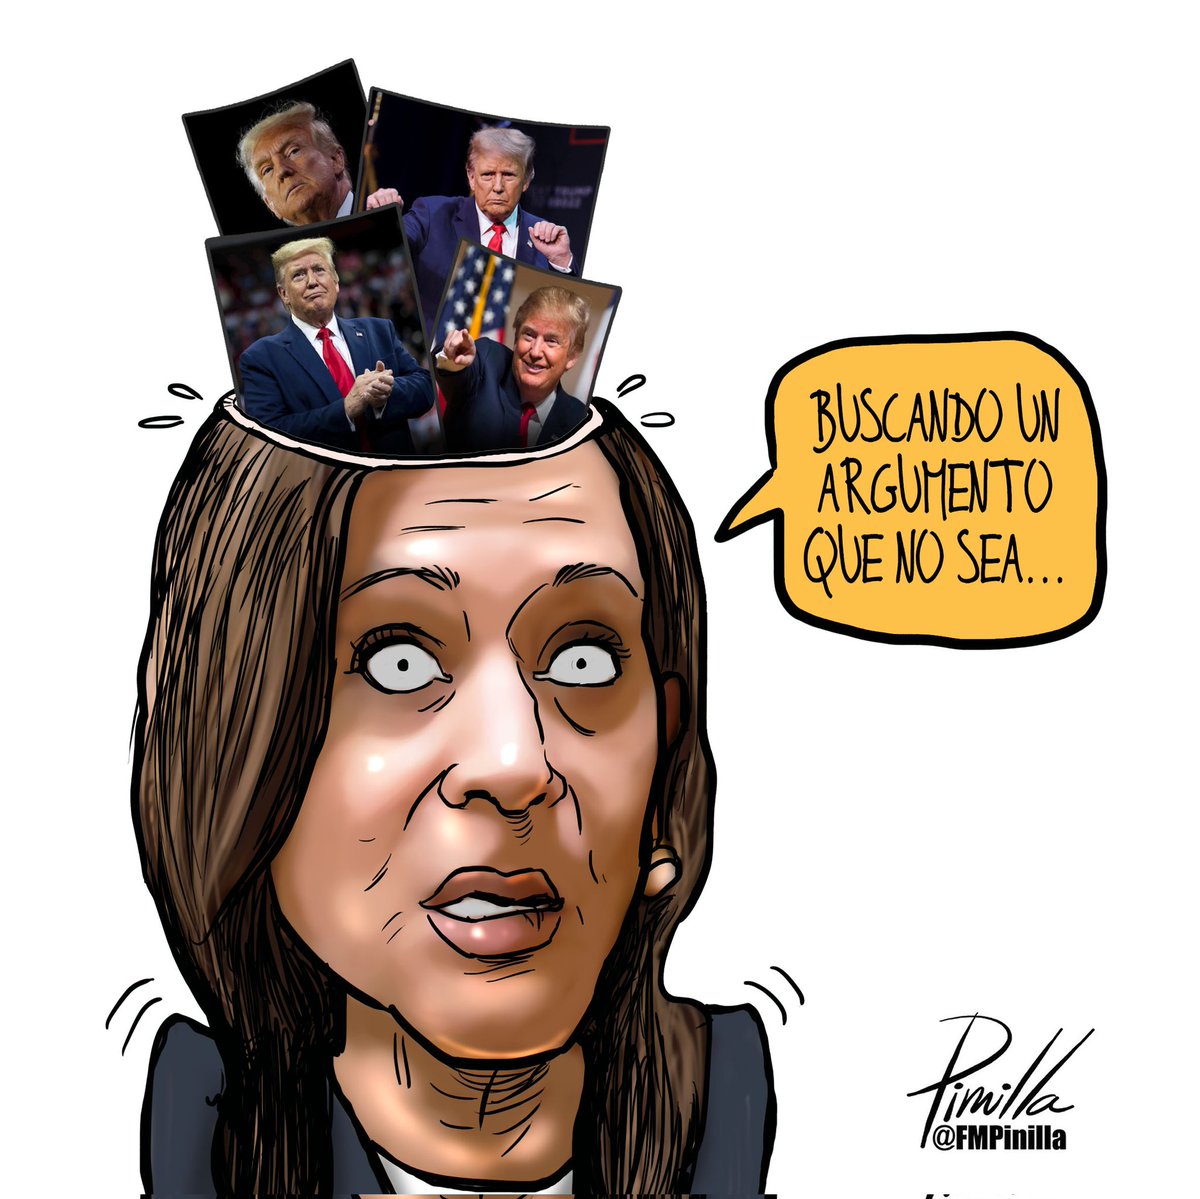 Kamala con pocos argumentos...
•
#dibujolibre para @dlasamericas_
•
#caricatura #cartoon #usa #eeuu🇺🇸 #eeuuu #politicalcartoon @KamalaHarris